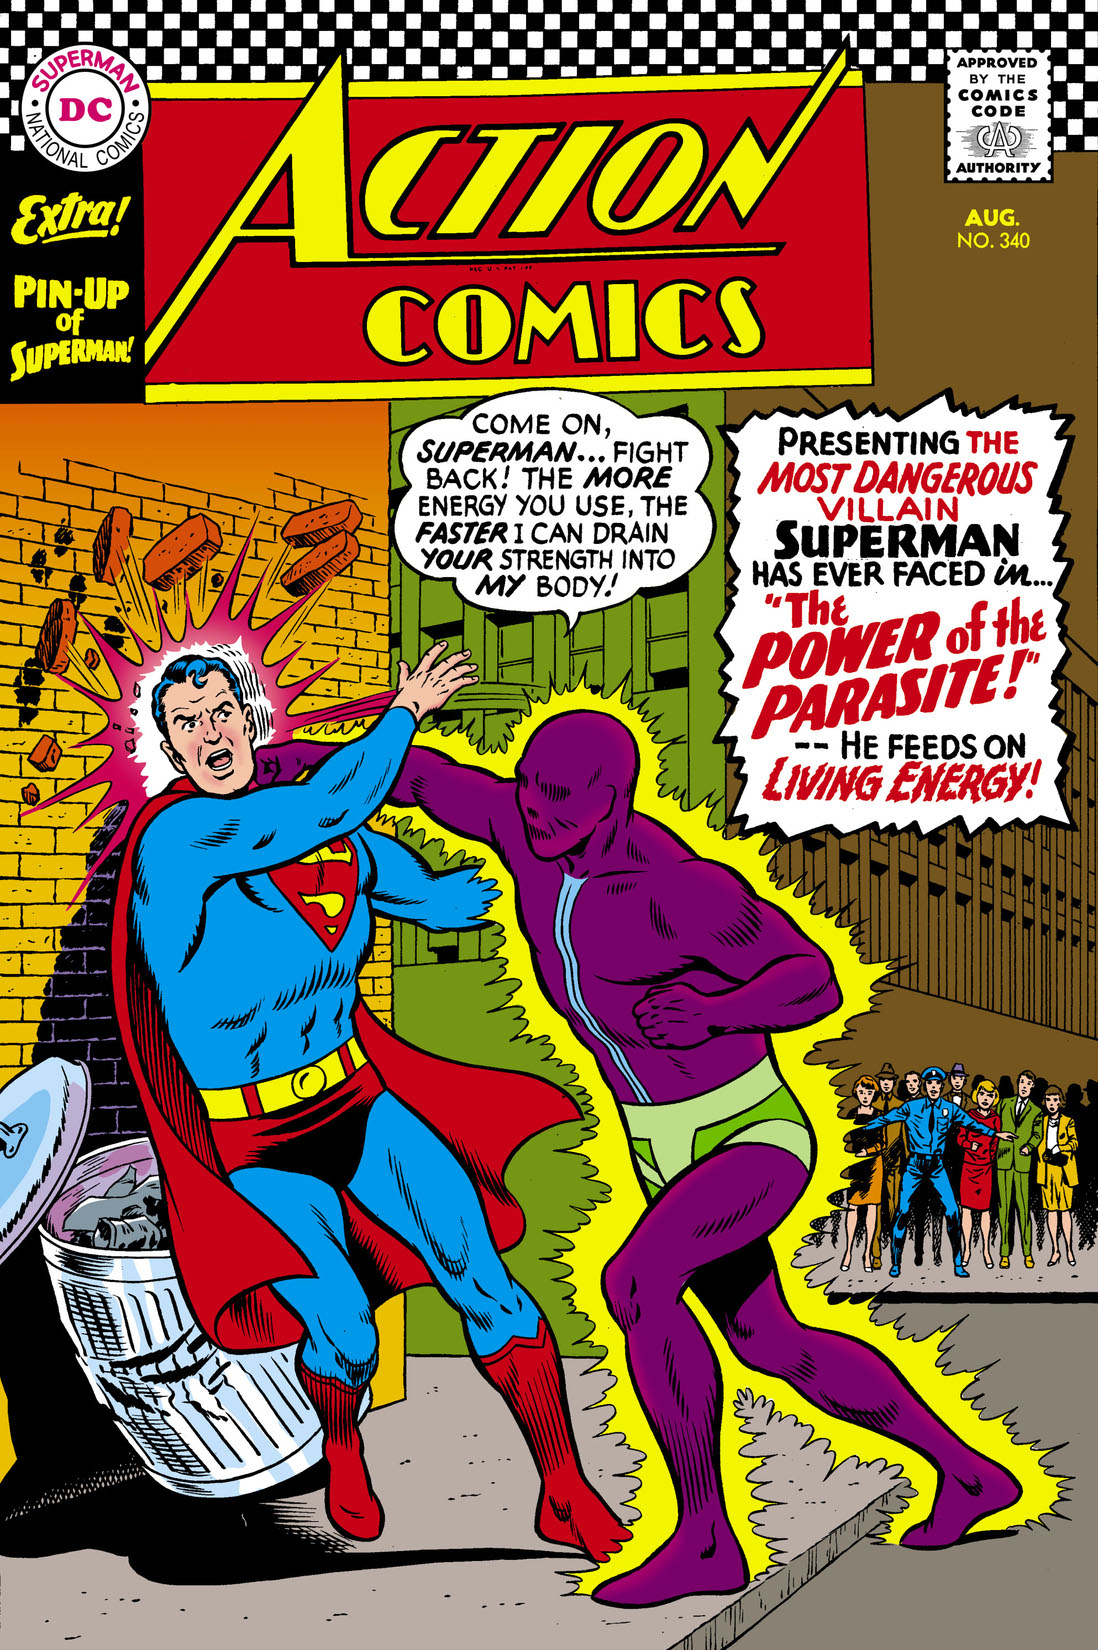 Action Comics (1938-) #340 preview images